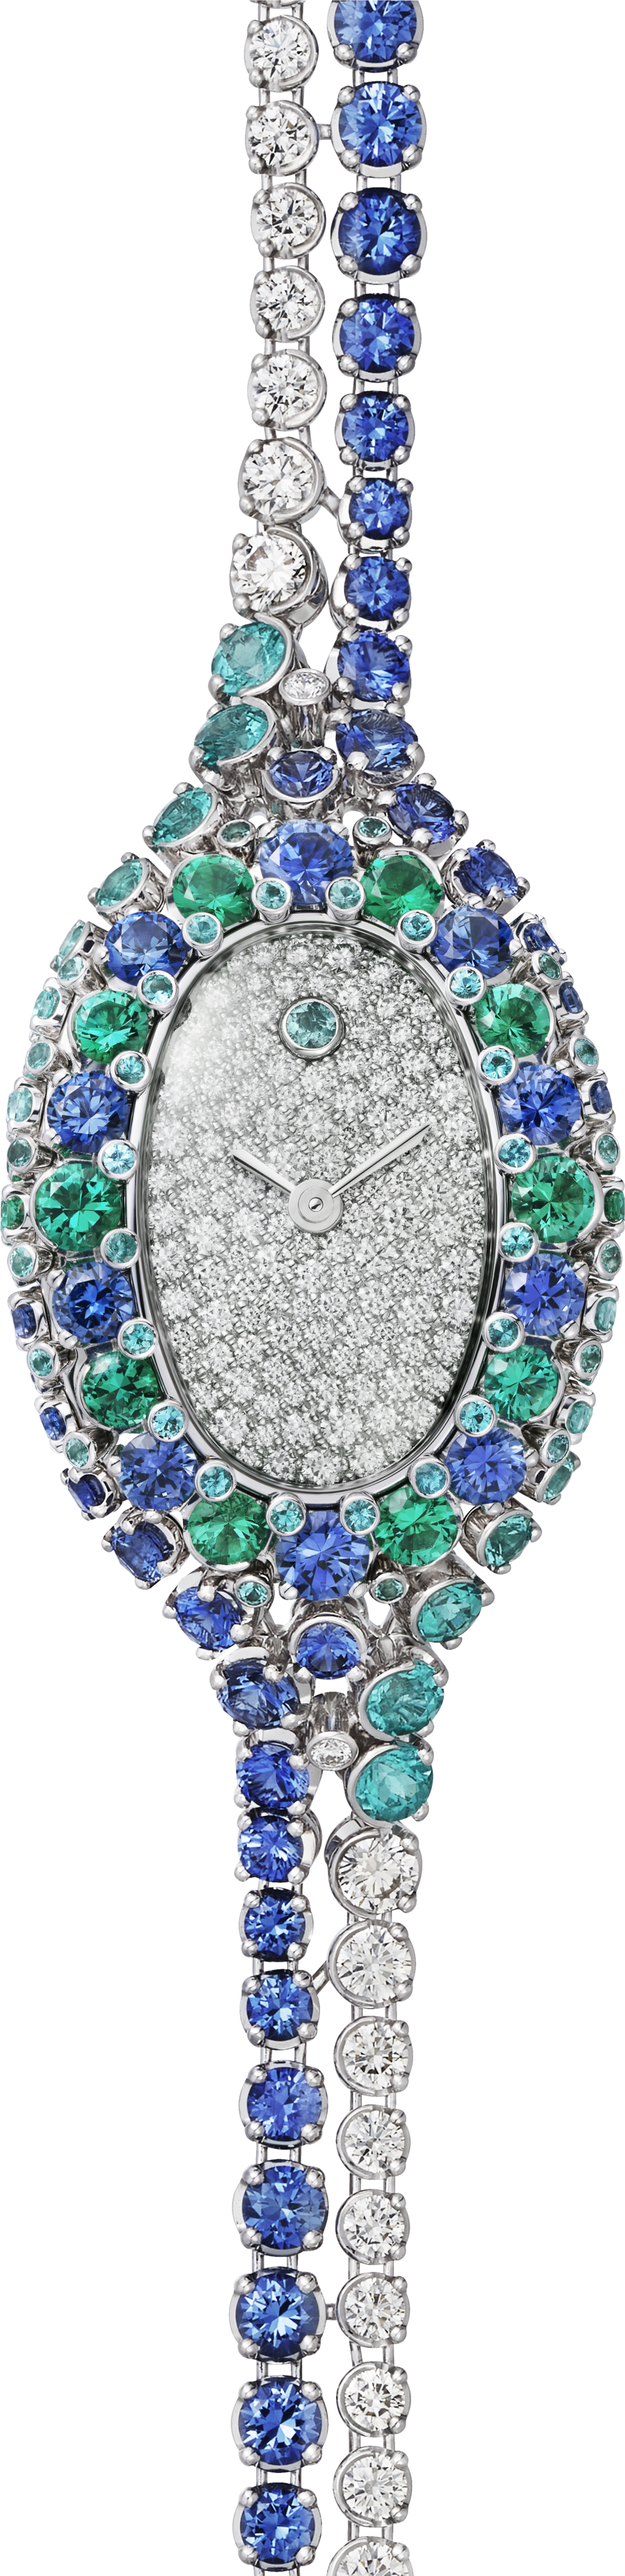 Baignoire jewellery watchMini model, quartz movement, white gold, diamonds, sapphires, emeralds, blue tourmalines.